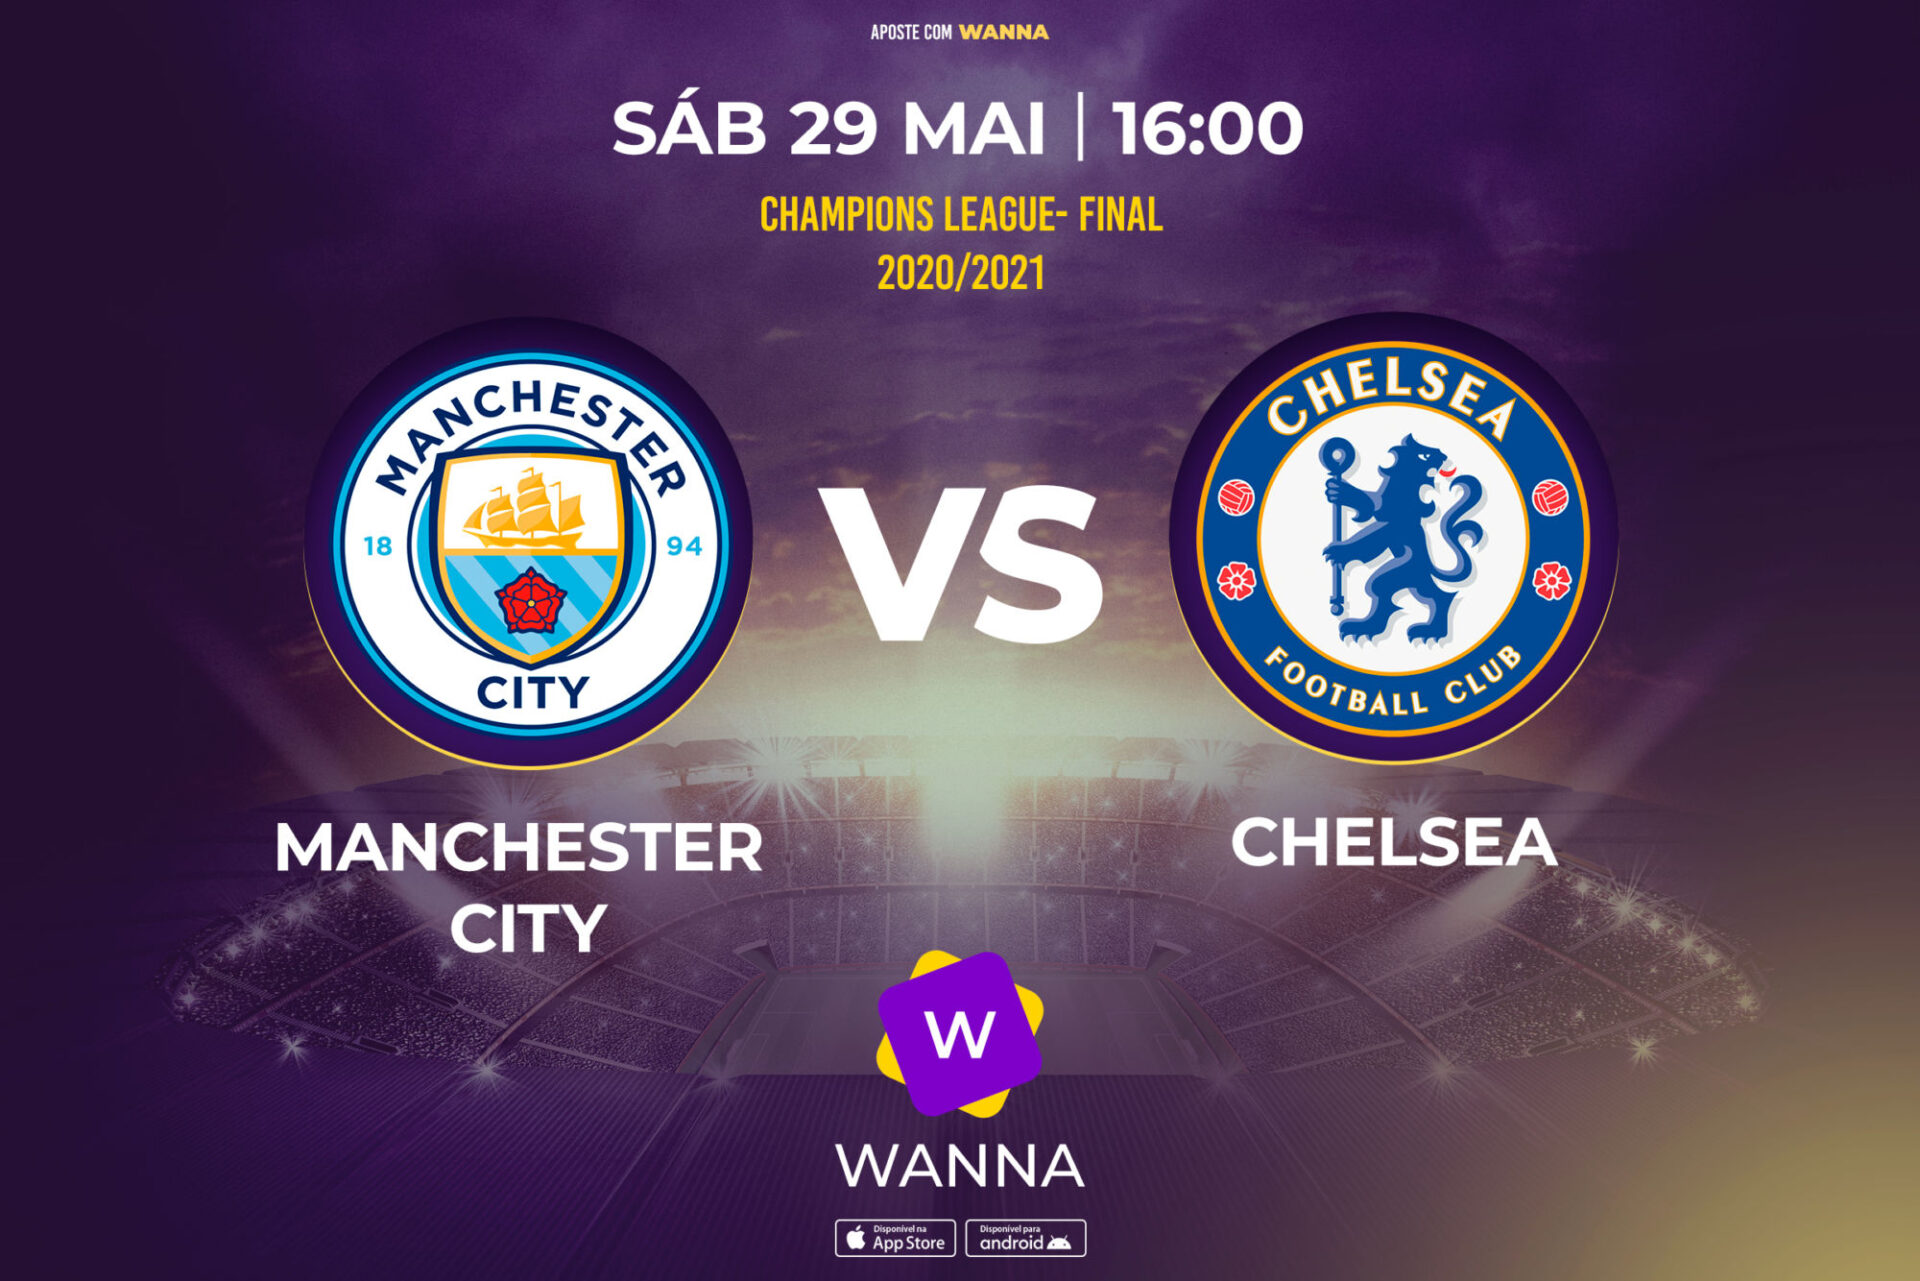 Manchester City x Chelsea Champions League Final Wanna